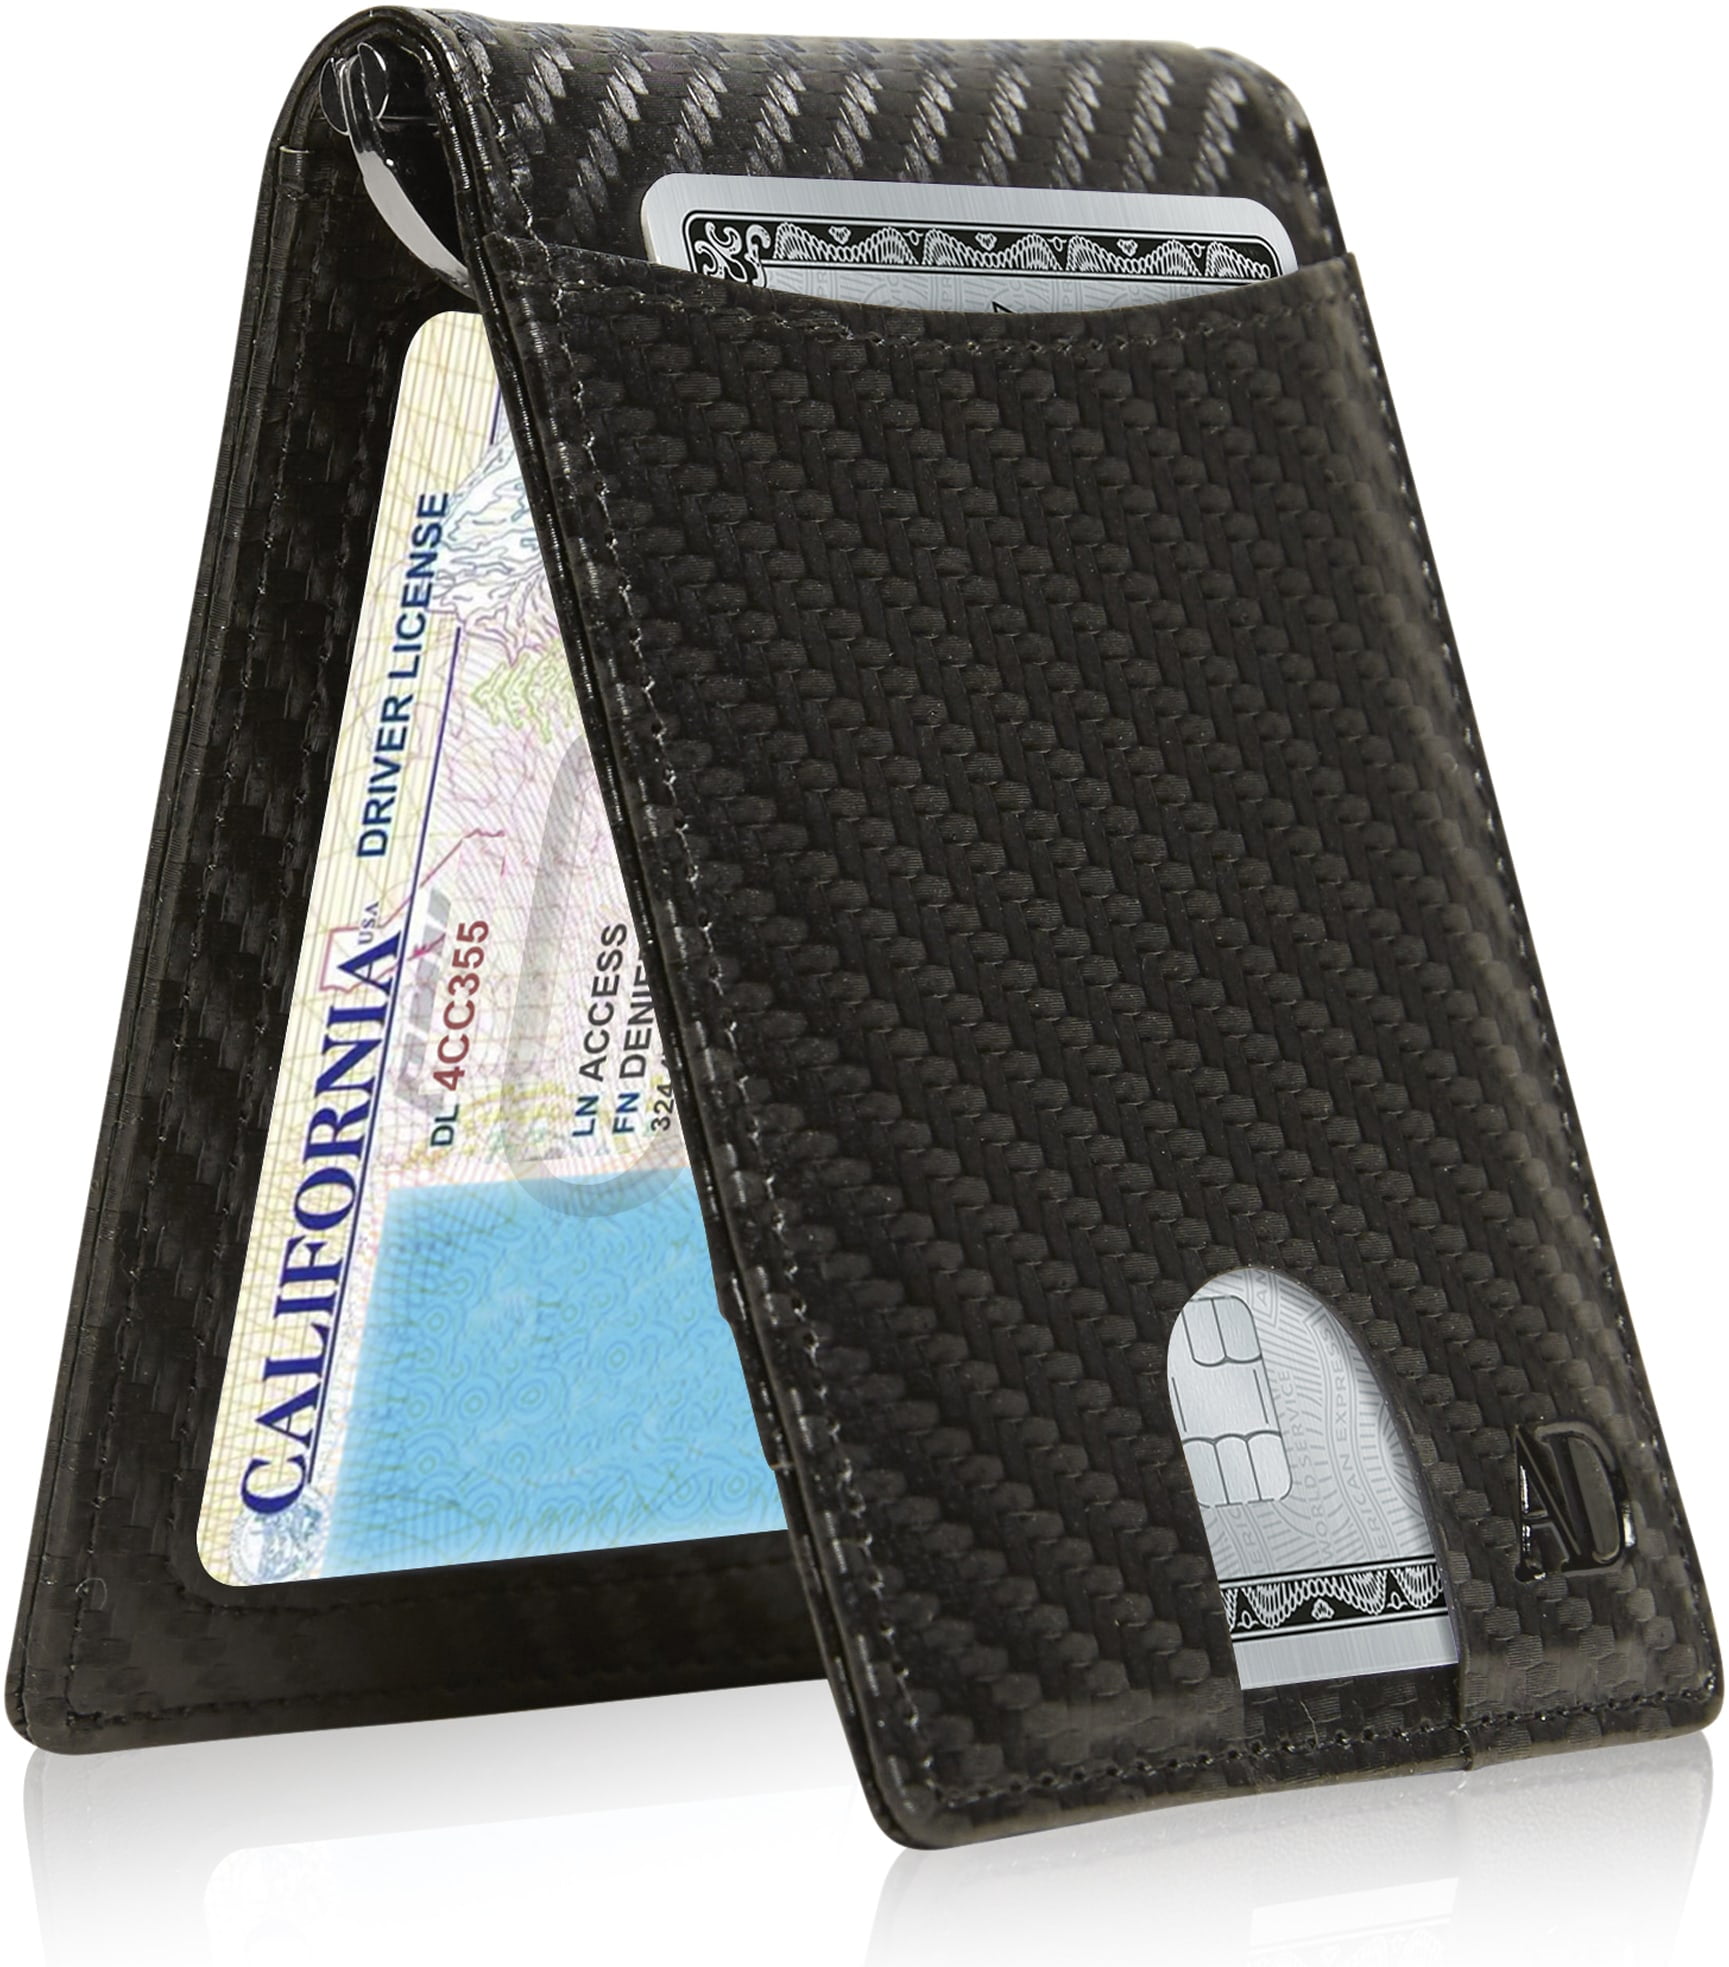 Access Denied - Slim Wallets For Men Minimalist Bifold Mens Wallet With Money Clip Front Pocket ...